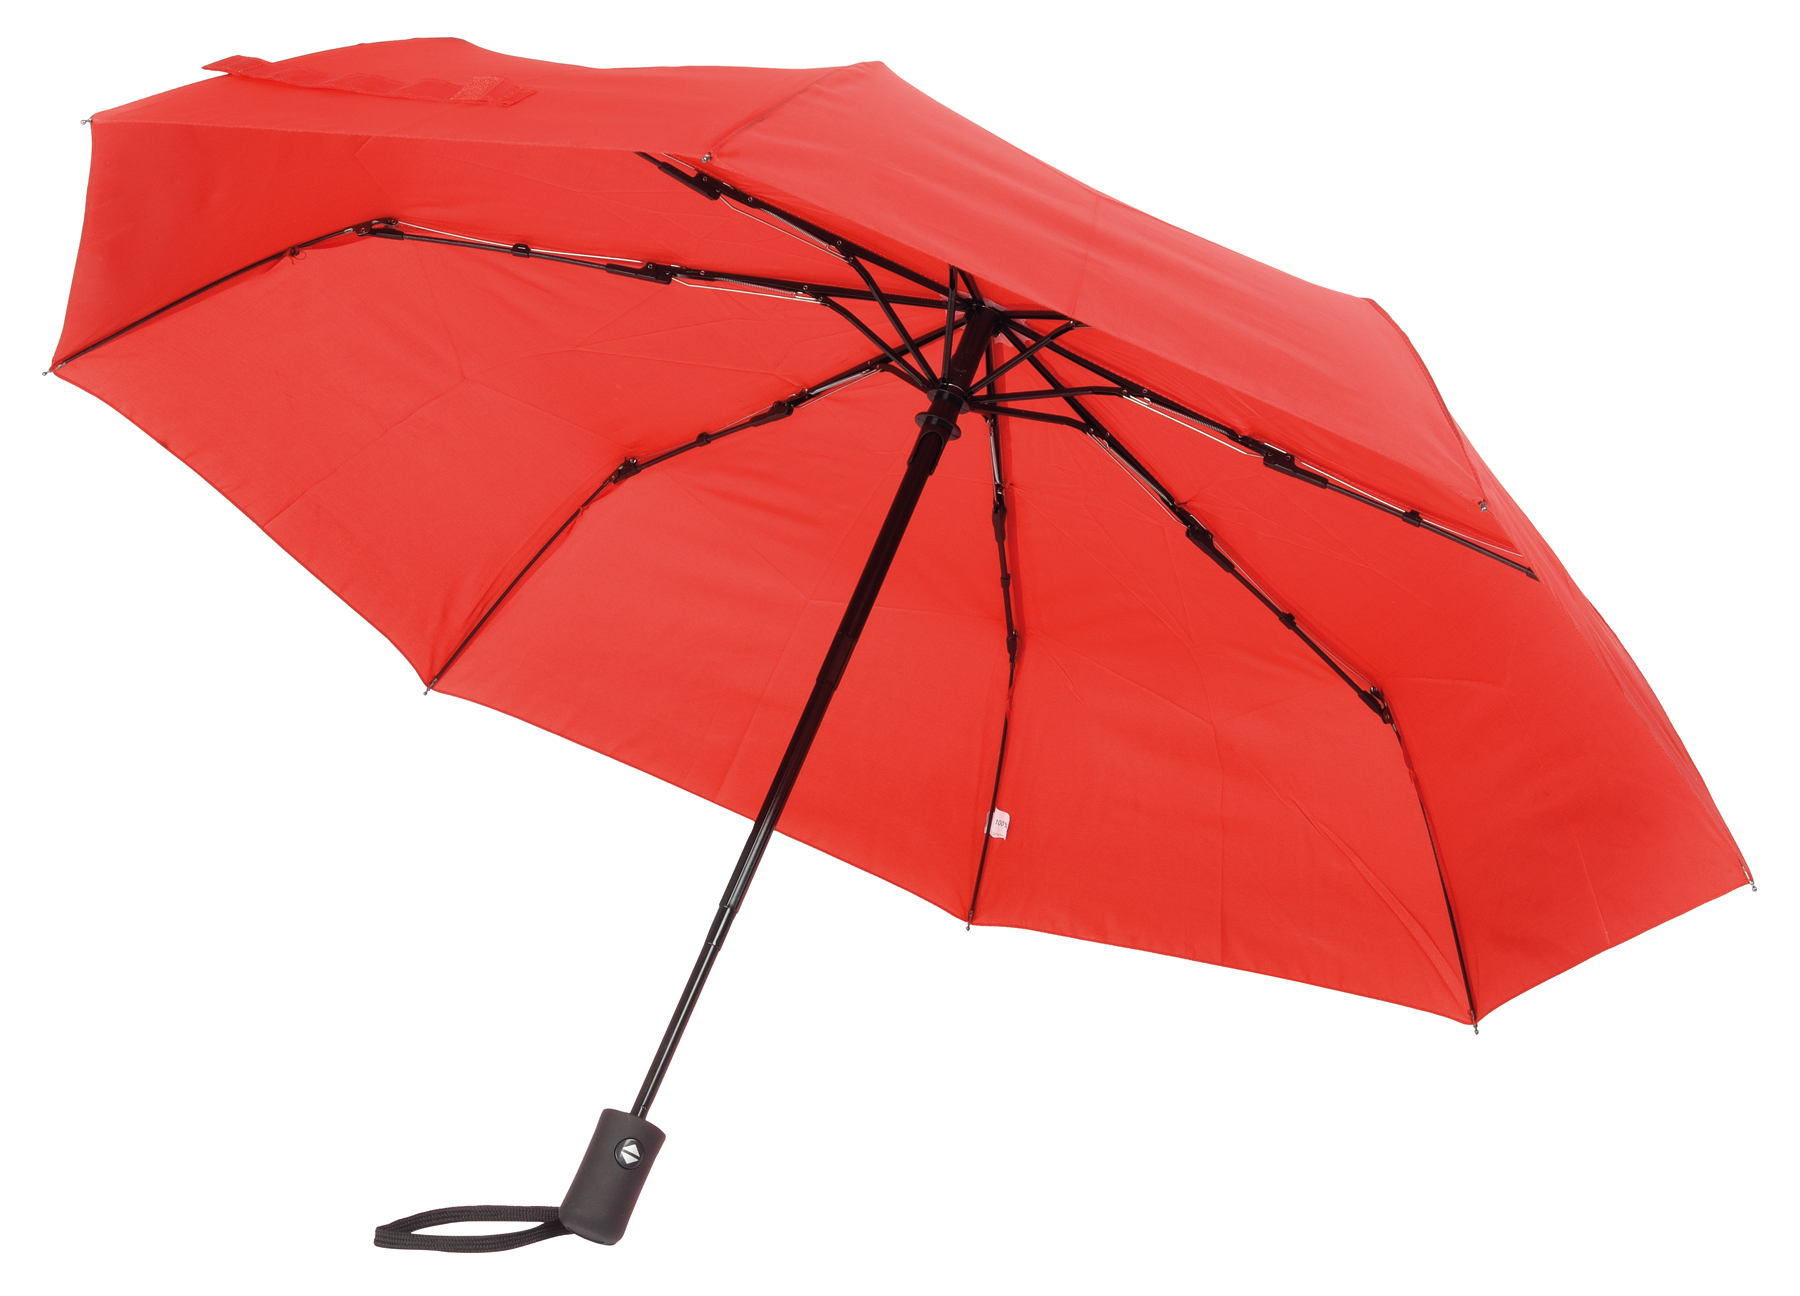 Automatic open-close windproof pocket umbrella PLOPP - red